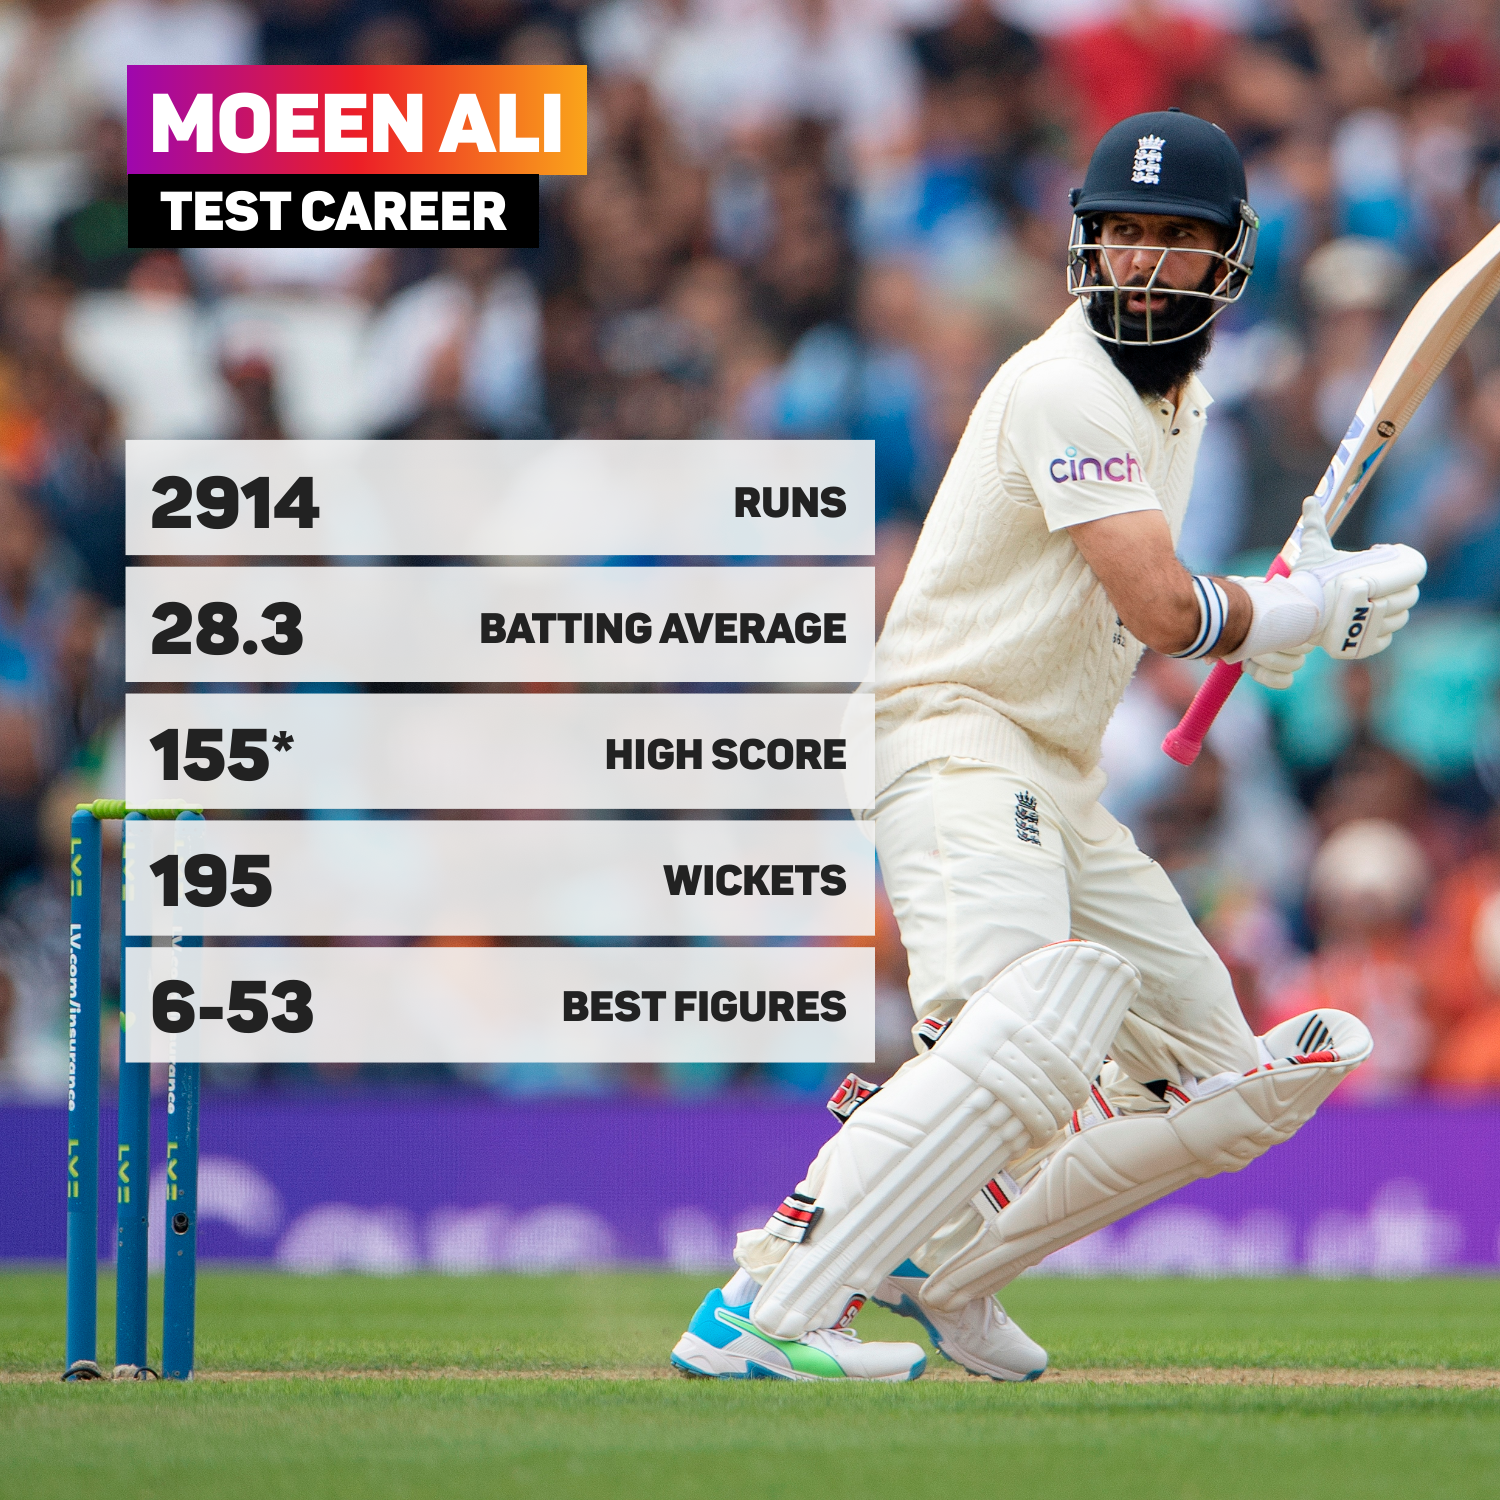 Moeen Ali's Test career